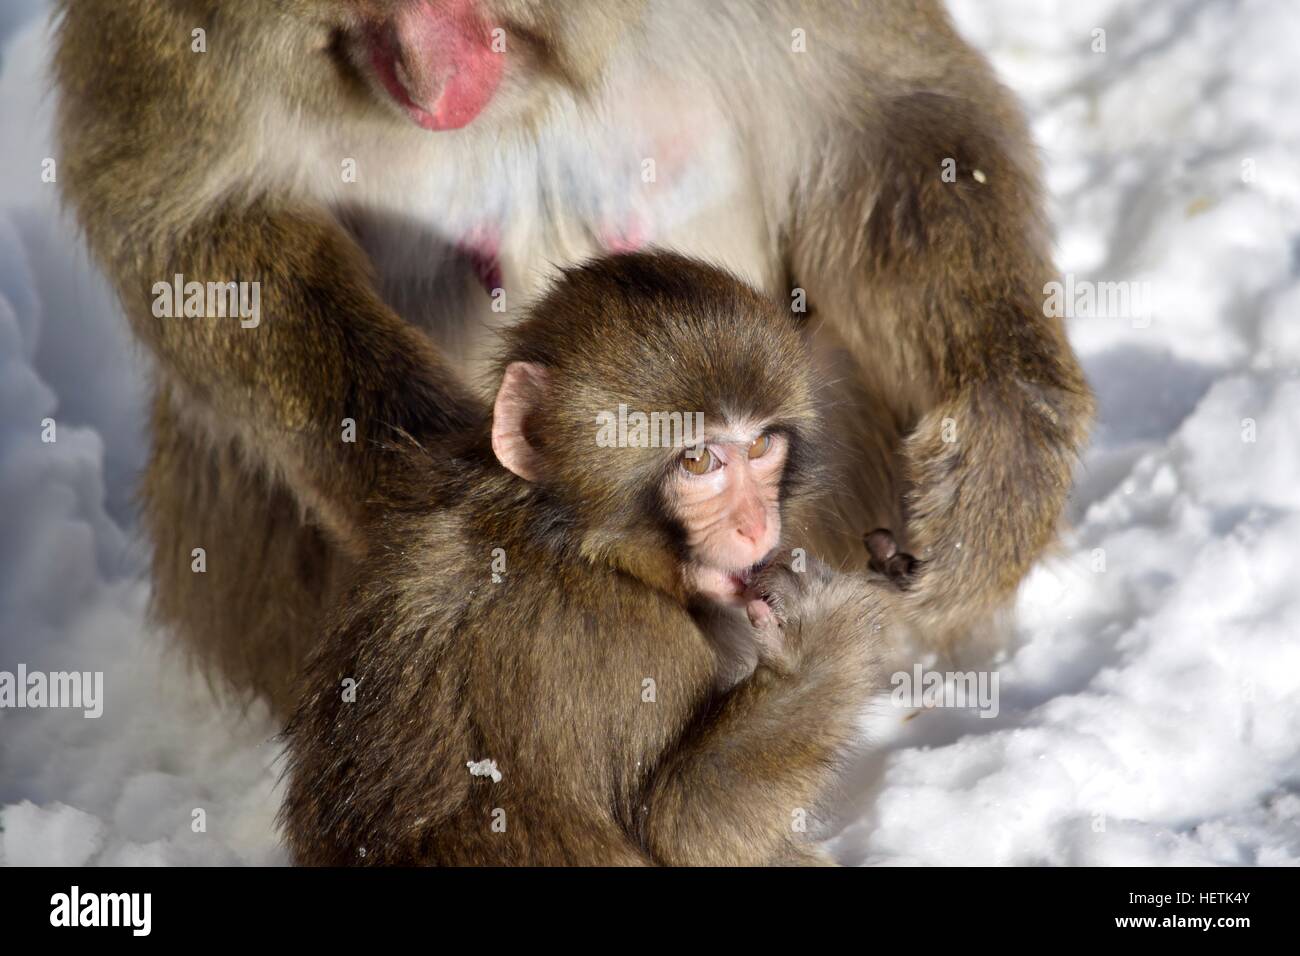 Mono de nieve bebe criado por Foto de stock 1876029007